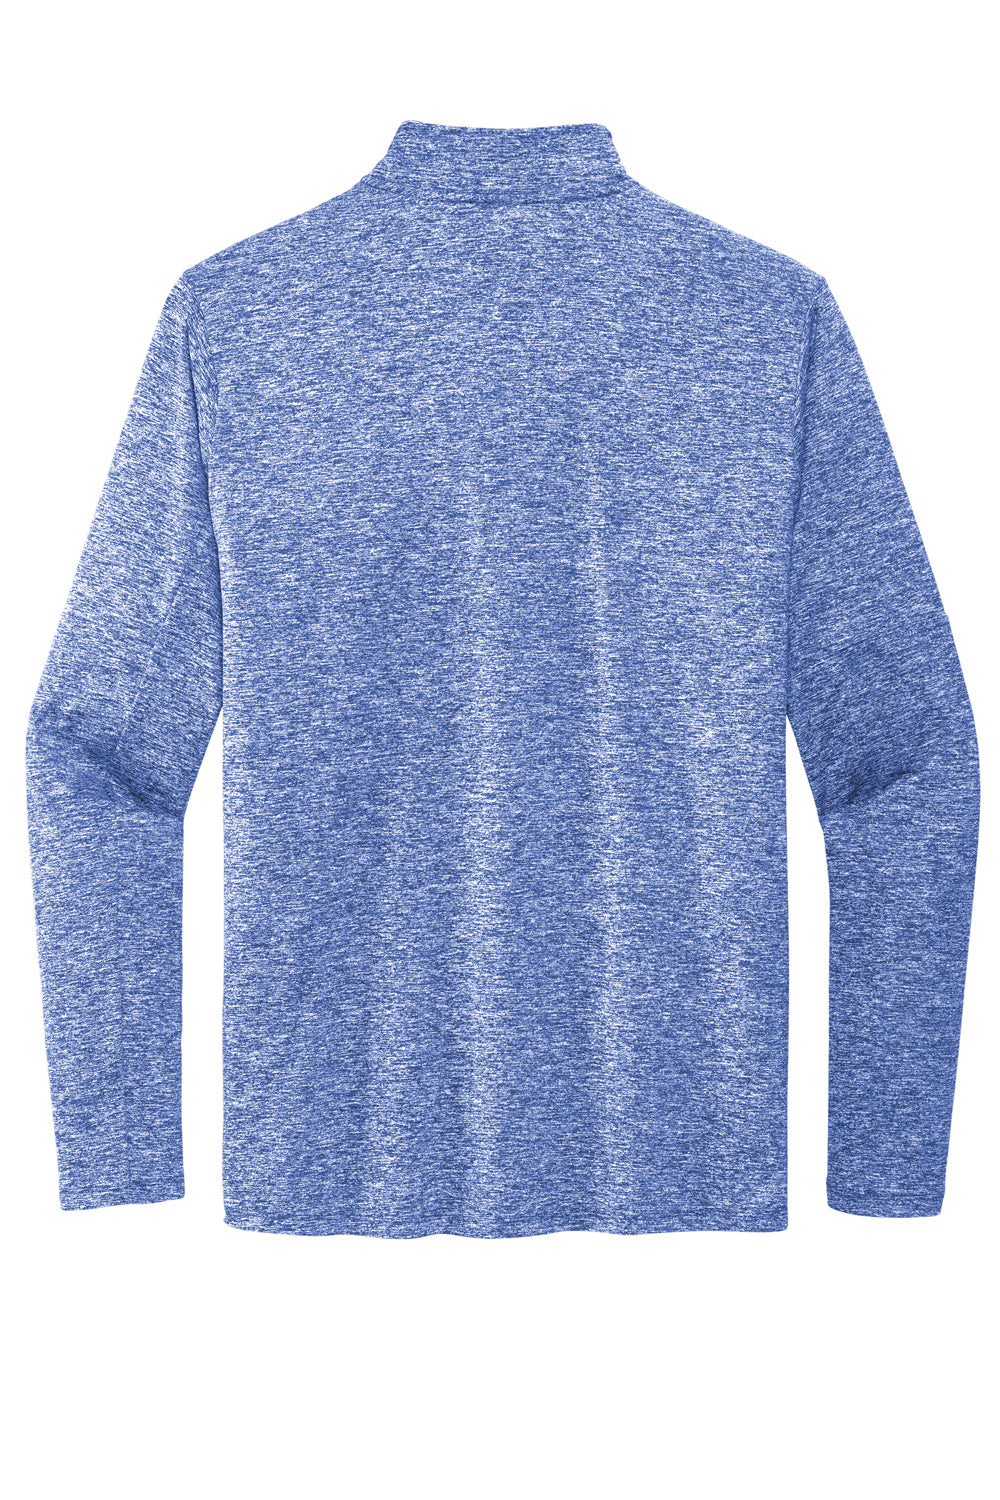 Nike NKDH4949 Mens Element Dri-Fit Moisture Wicking 1/4 Zip Sweatshirt Heather Royal Blue Flat Back